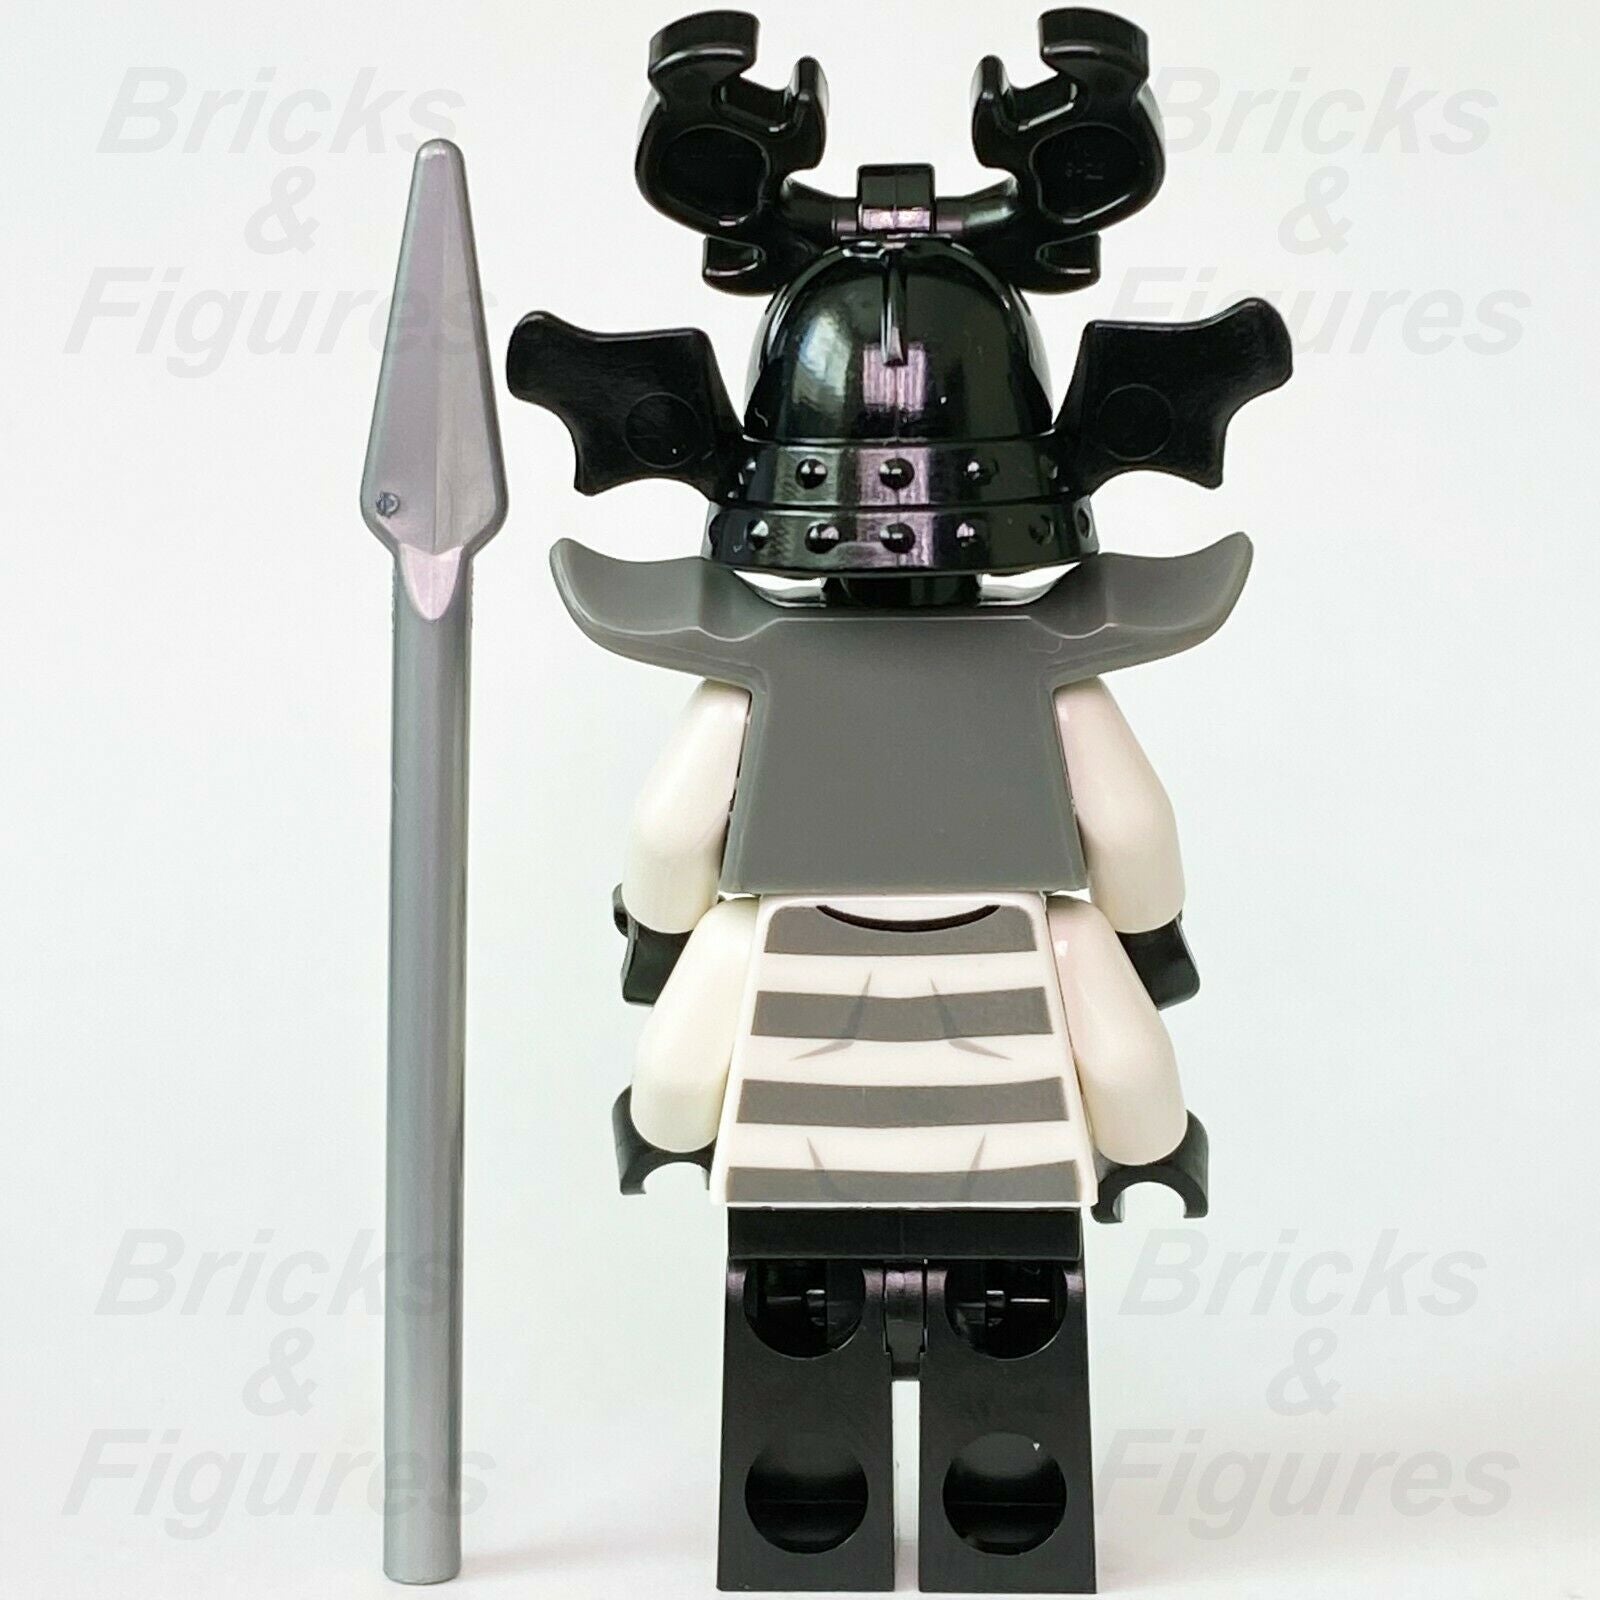 New Ninjago LEGO Giant Stone Army Warrior with Spear Skybound Minifigure 70591 - Bricks & Figures